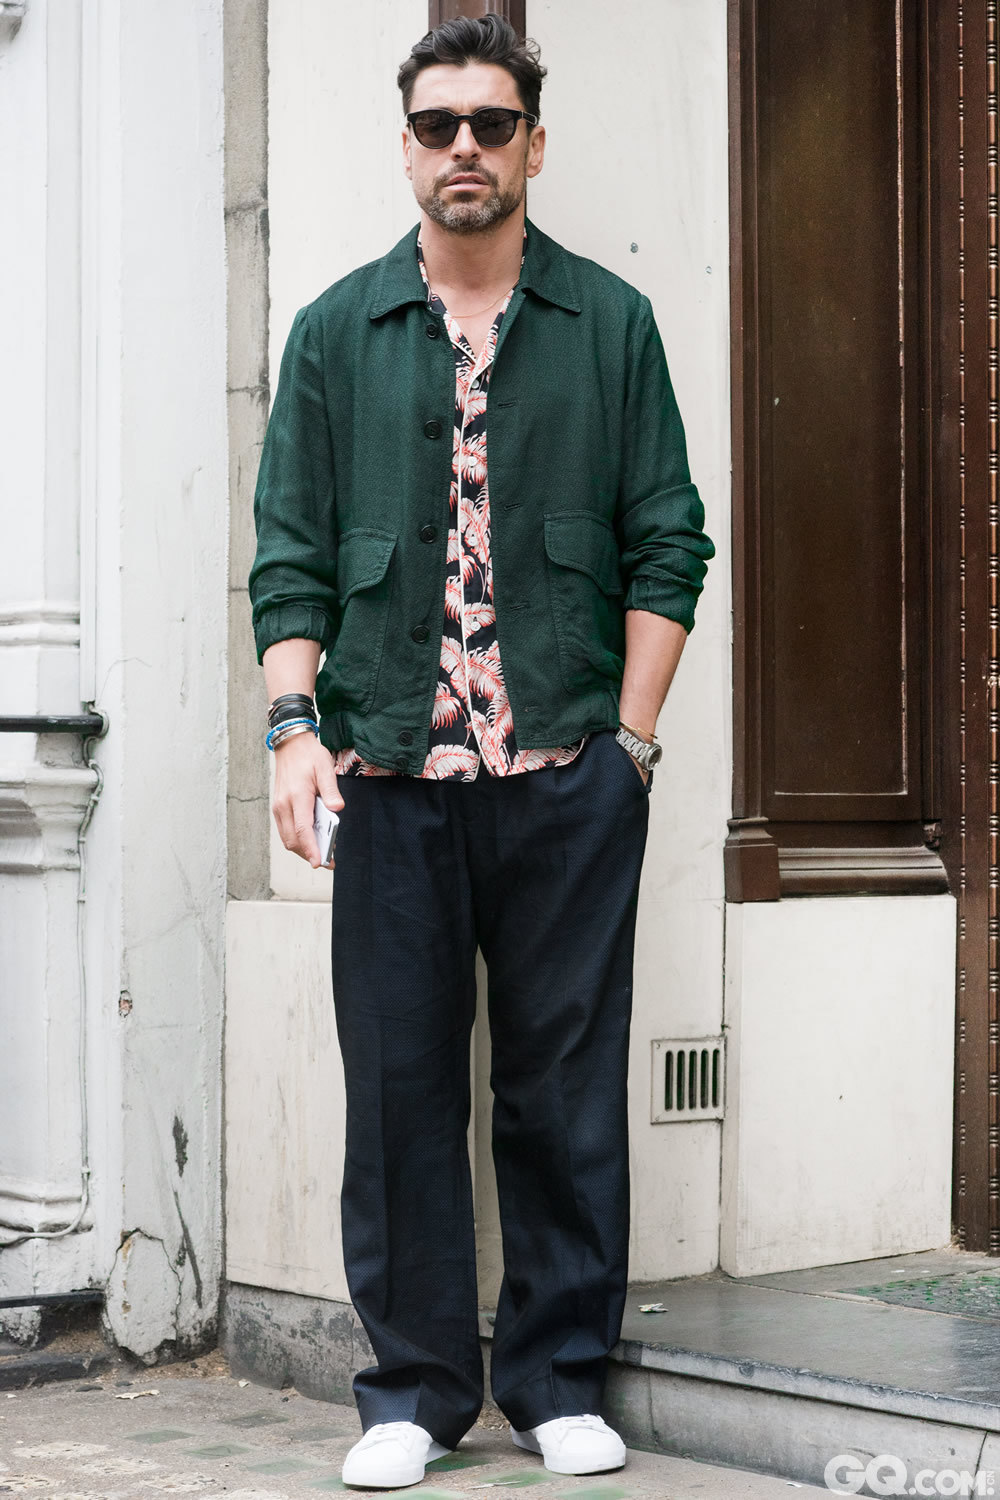 Alex
Sunglasses: Paul Smith
Jacket: Dries van Noten
Shirt: Marc Jacobs
	Trousers: Dries van Noten
	Shoes: Nike

Inspiration: Pajama 
（睡衣）